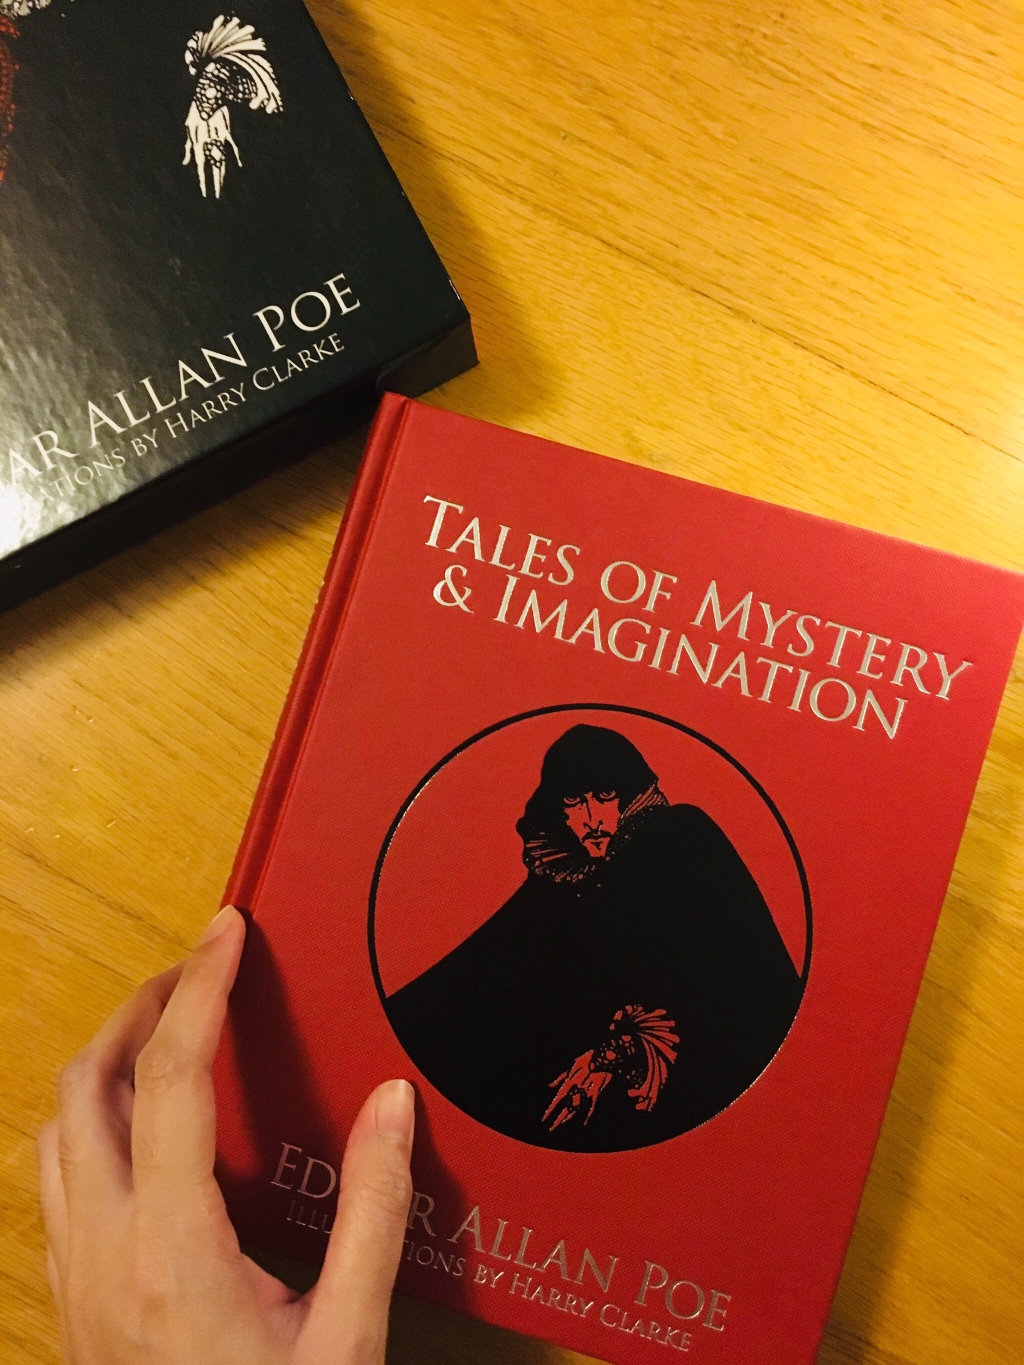 ‘Tales of Mystery & Imagination’ by Edgar Allan Poe